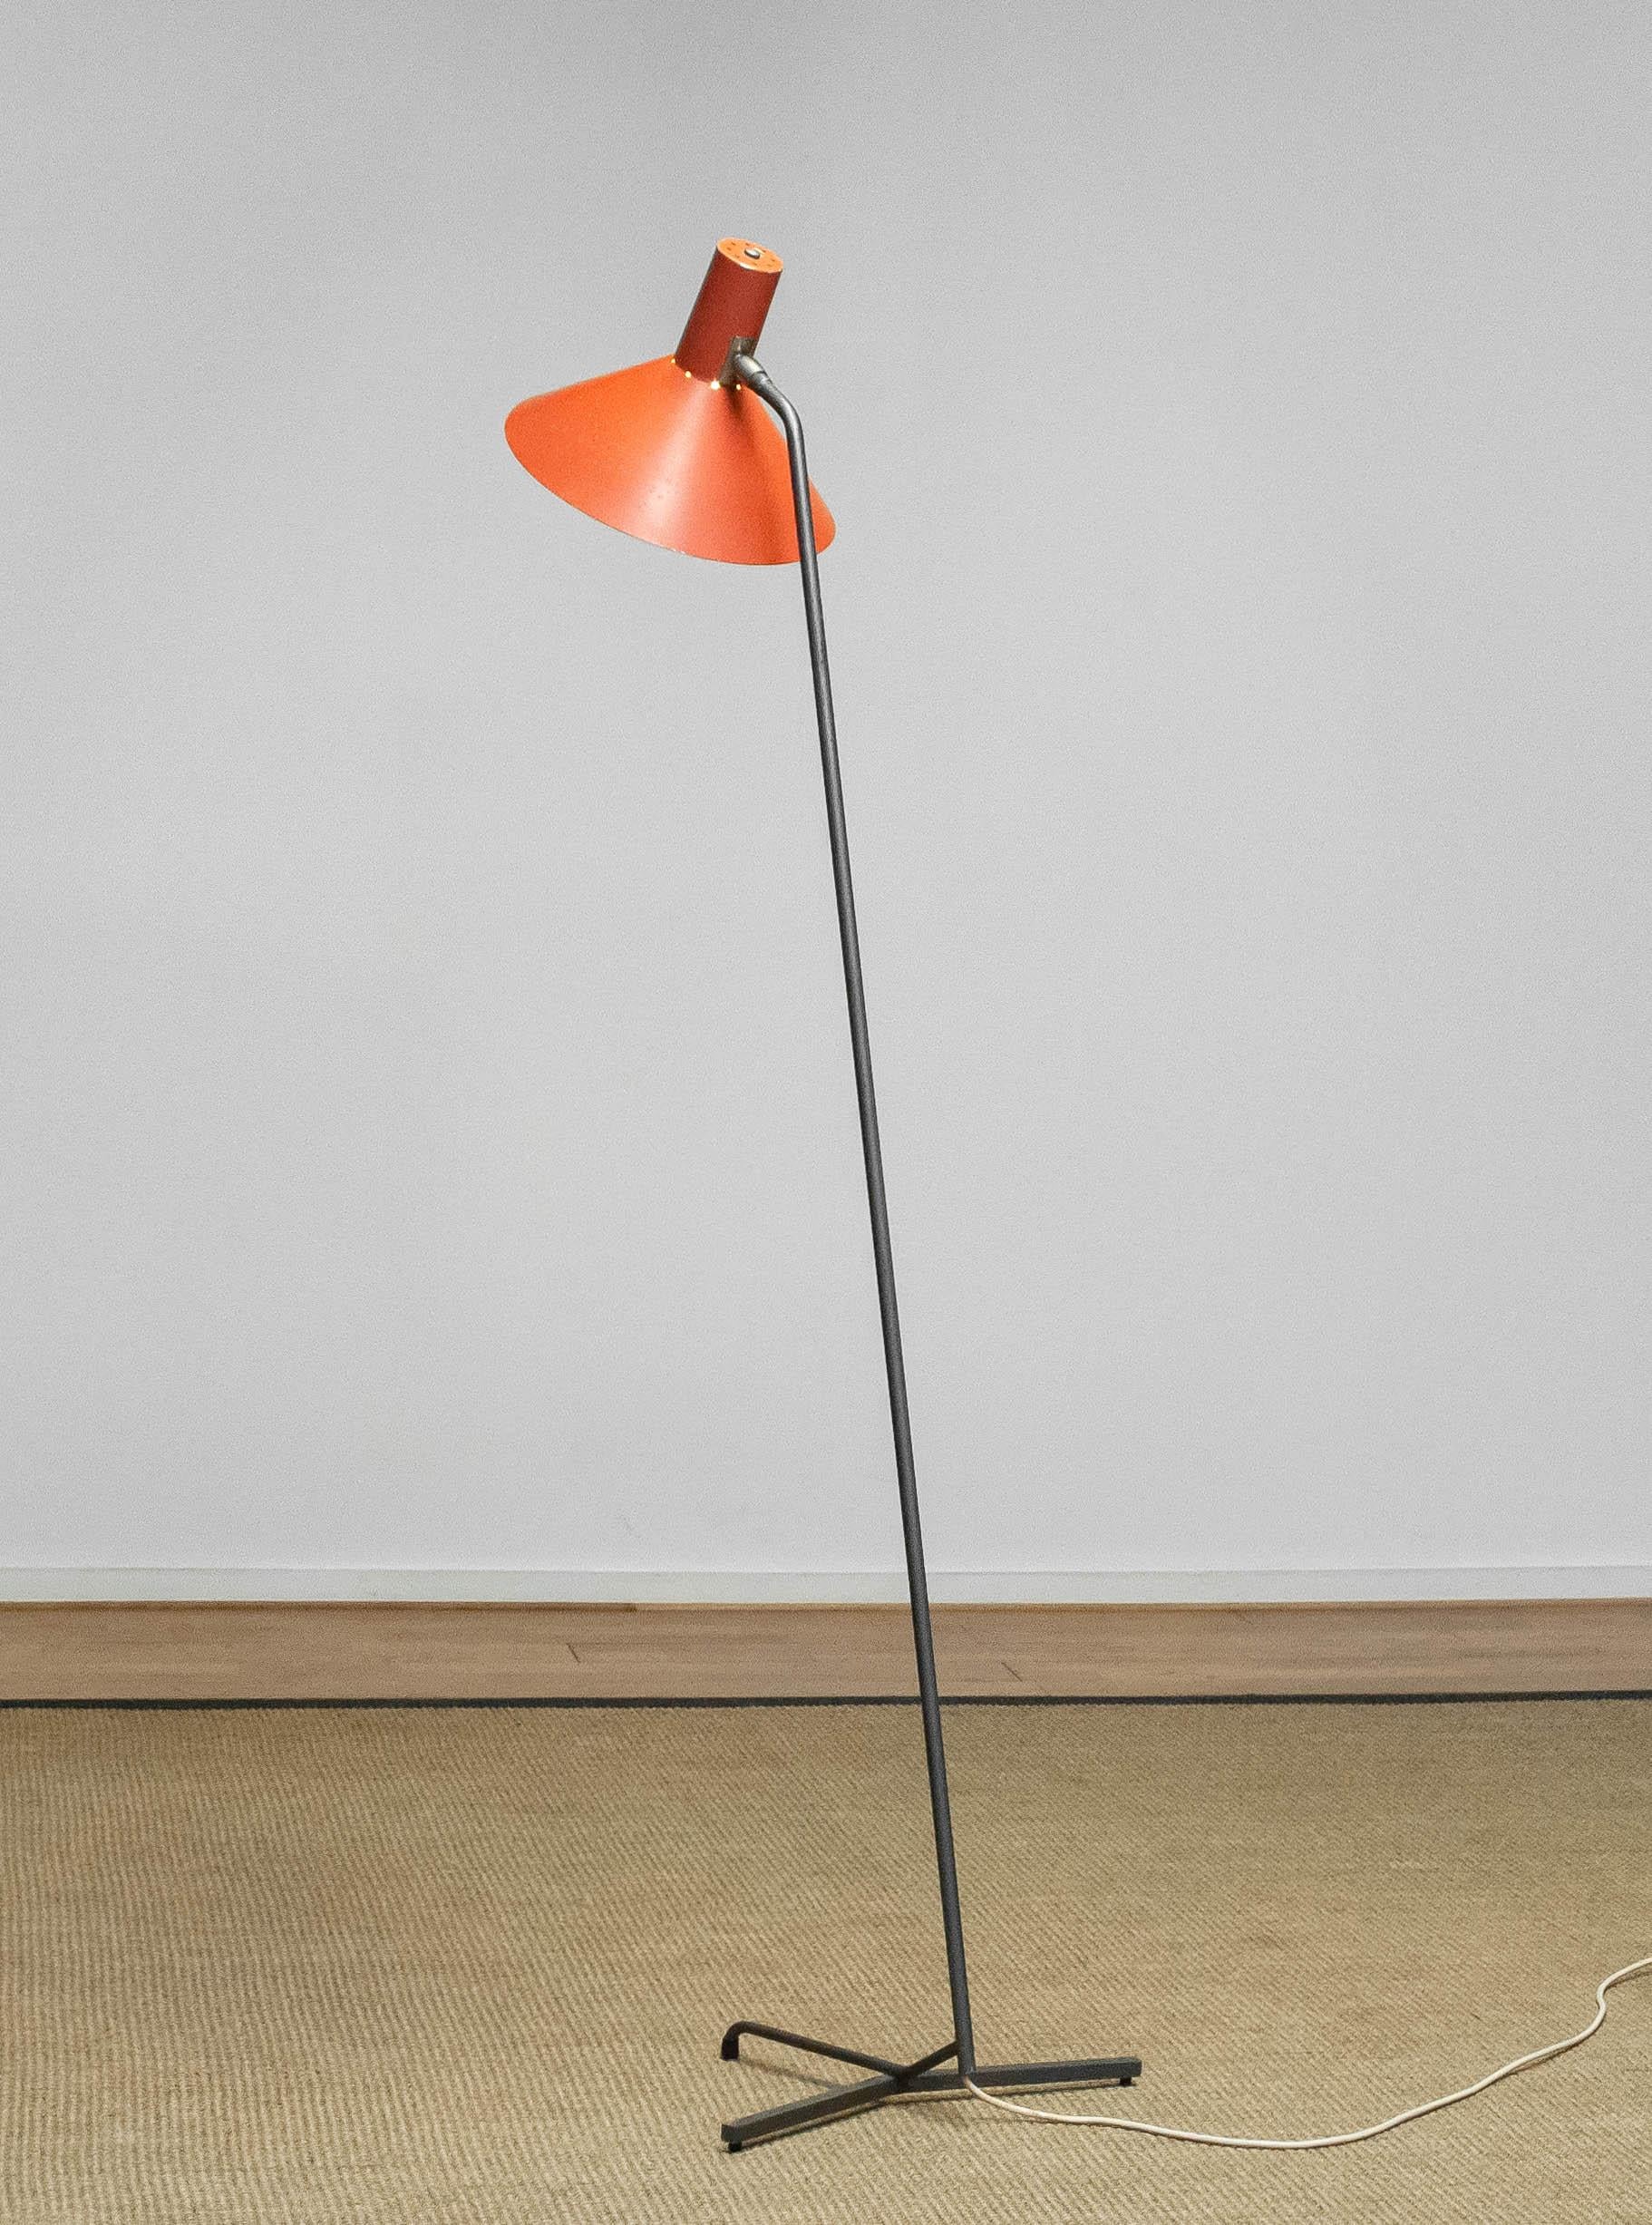 Aluminum 1960 Orange Dutch Grasshopper Floor Lamp By JJM Hoogervorst For Anvia  For Sale